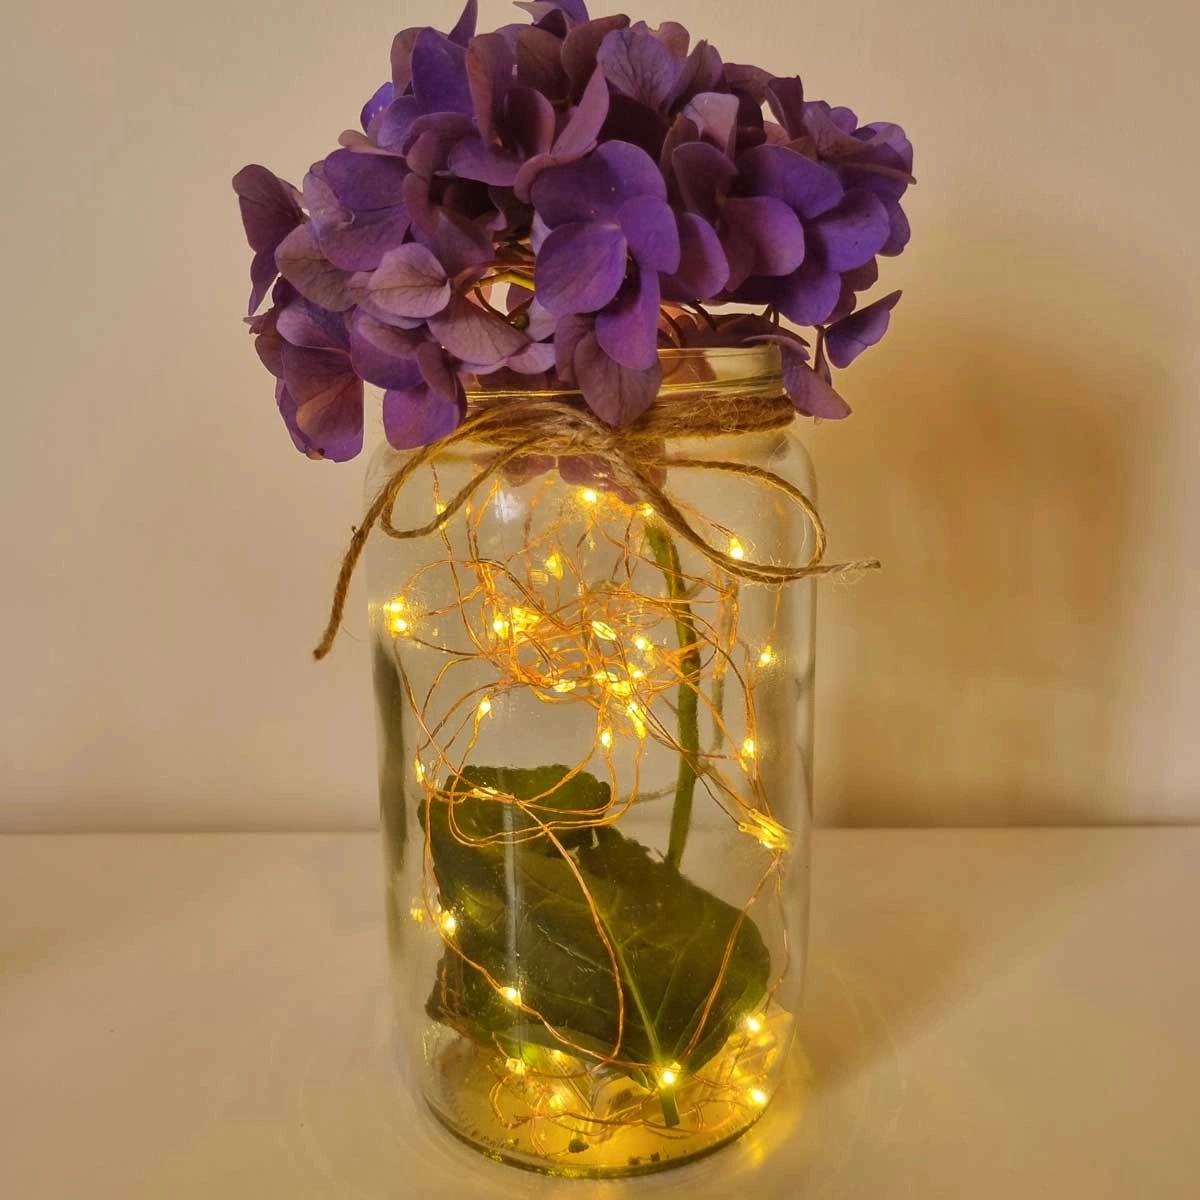 progressiv Dekan Urimelig How To Make a Fairy Light Mason Jar Centerpiece with Flowers